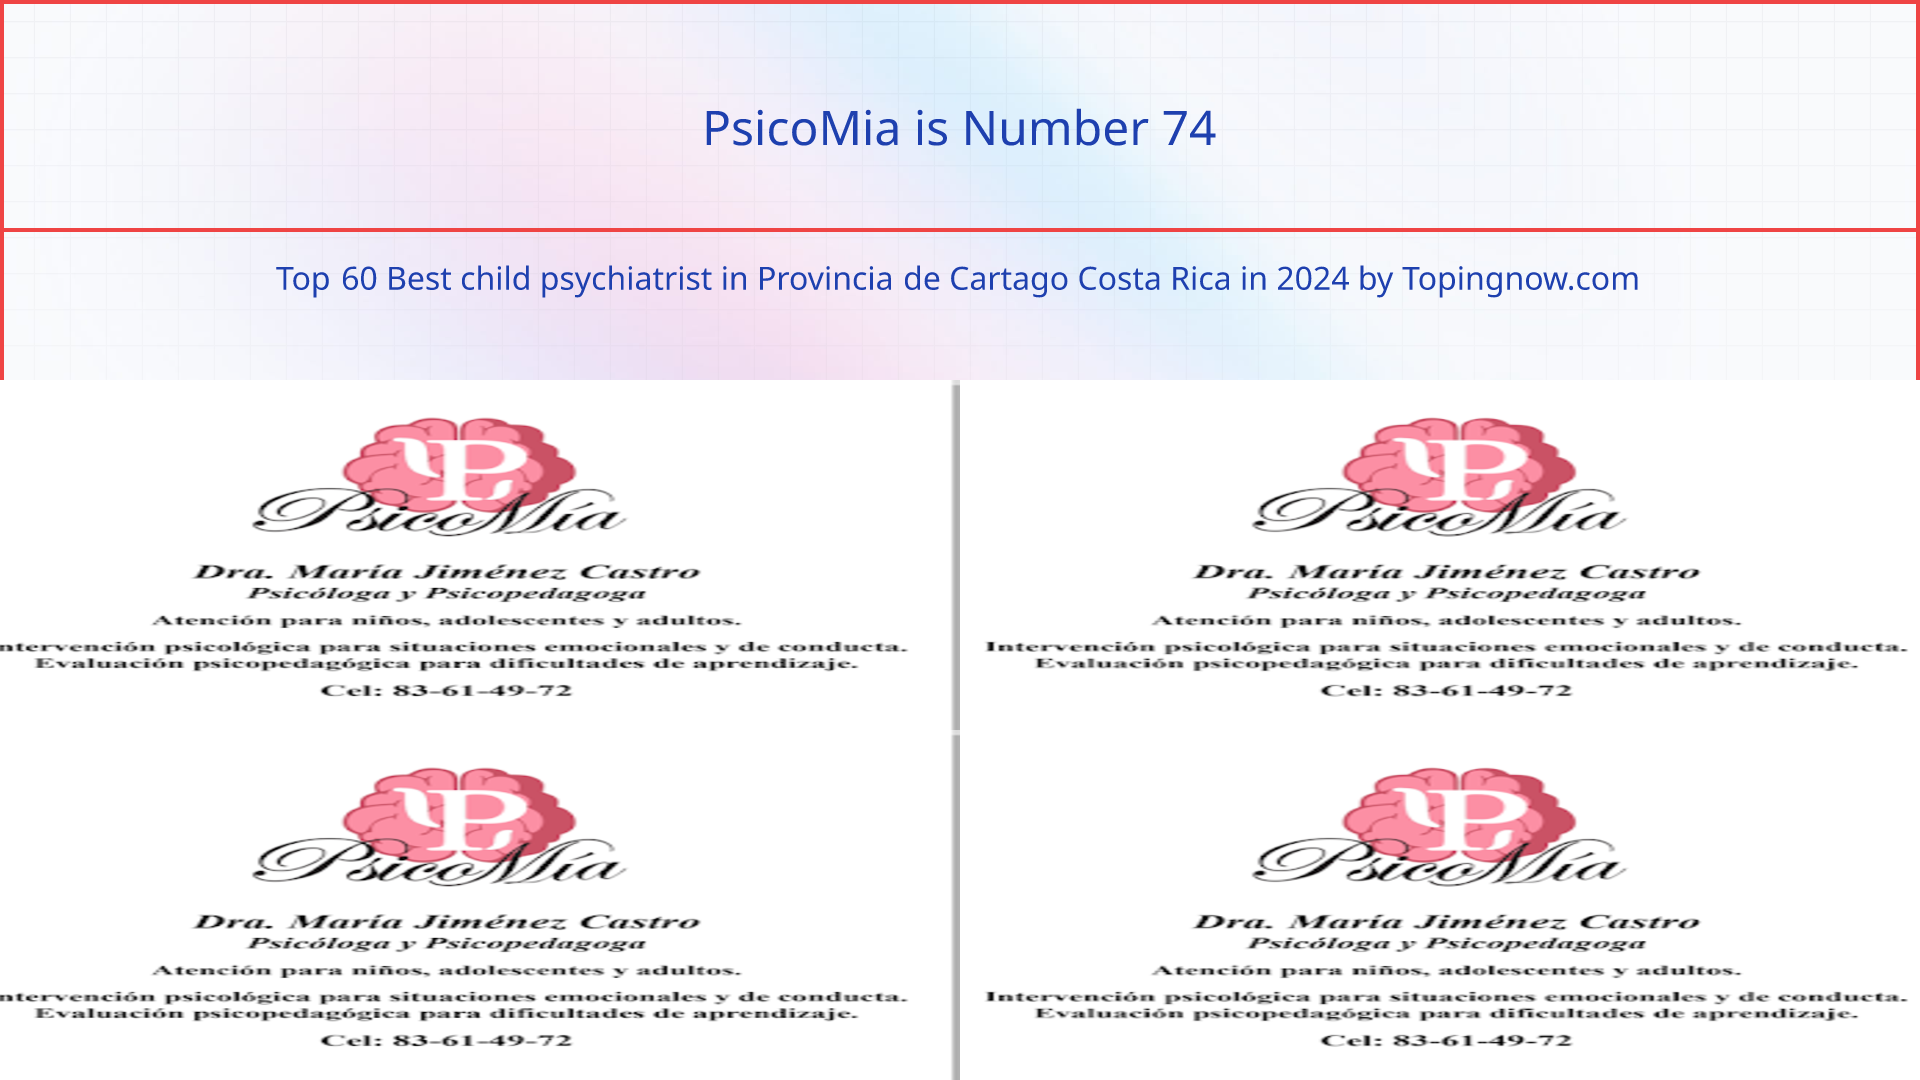 PsicoMia: Top 60 Best child psychiatrist in Provincia de Cartago Costa Rica in 2024